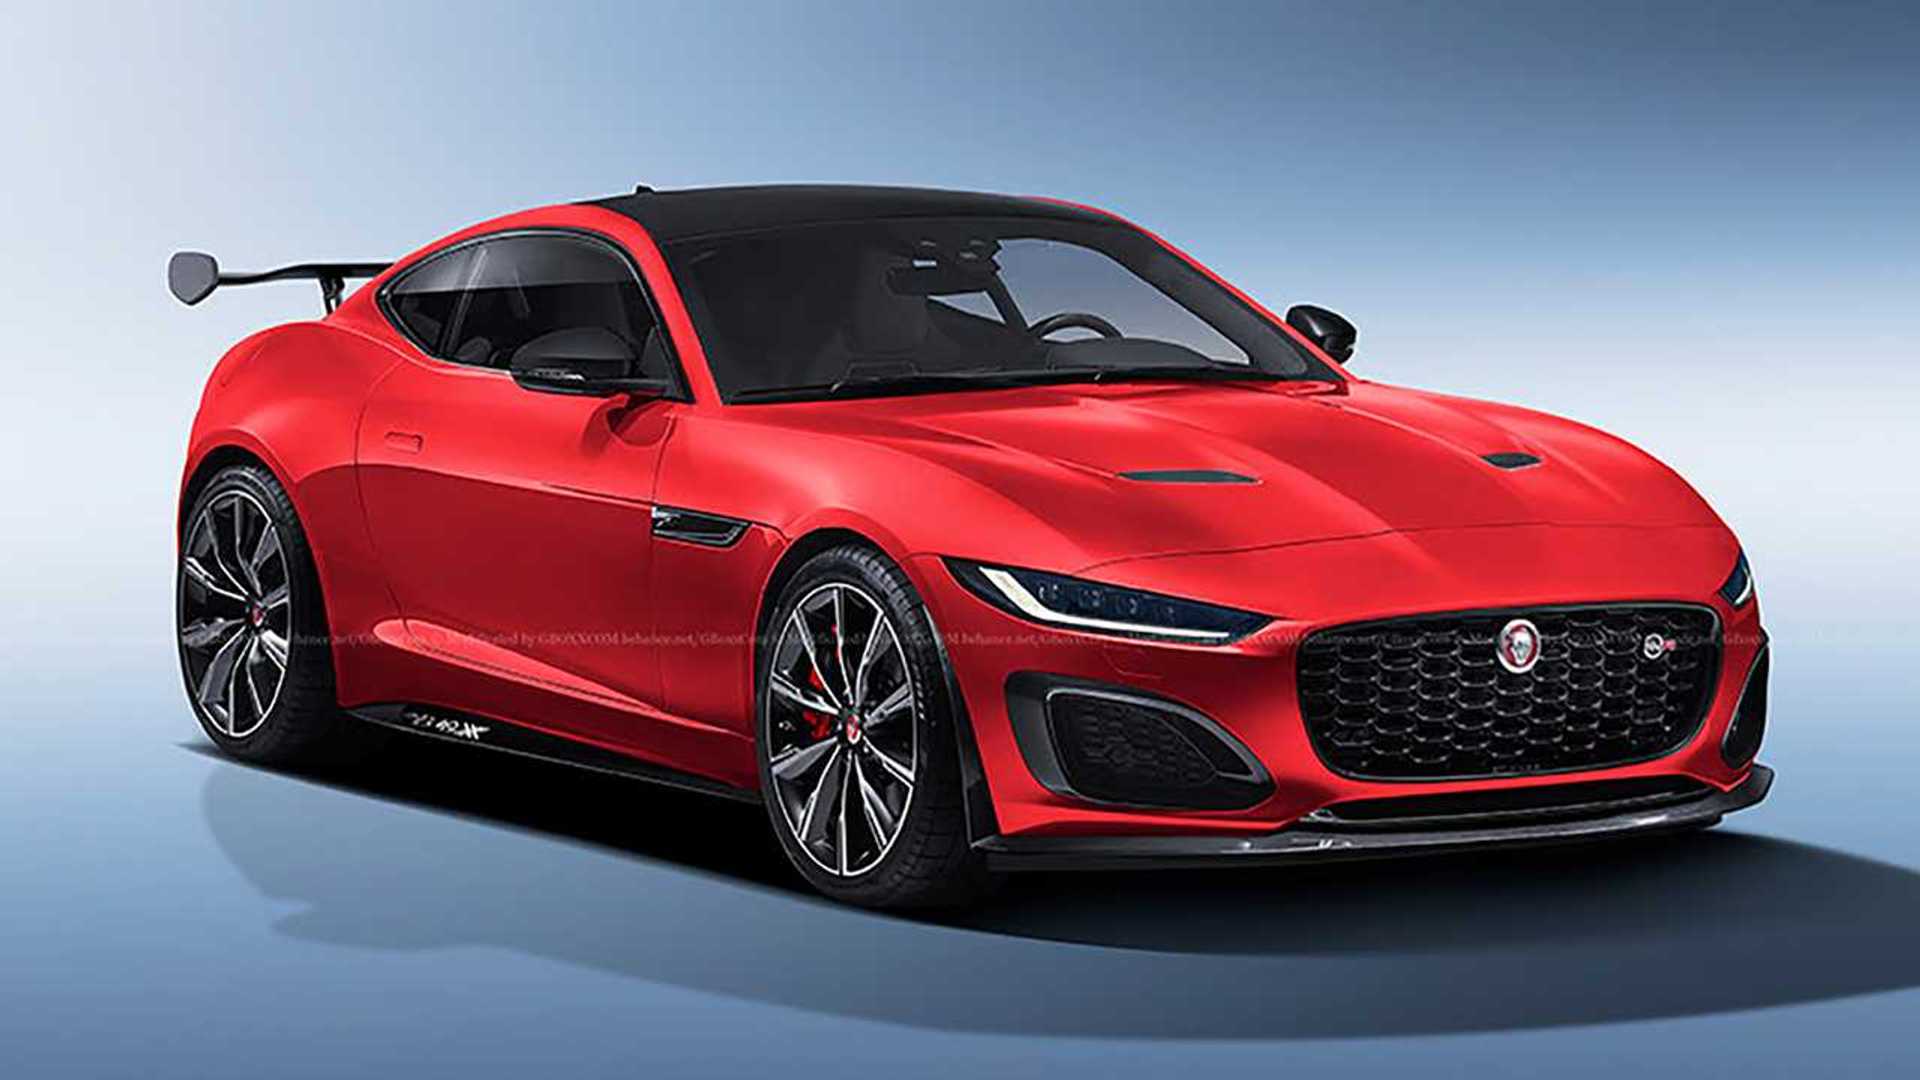 2021 Jaguar F-Type SVR Rendering Imagines A Car We Won't Get